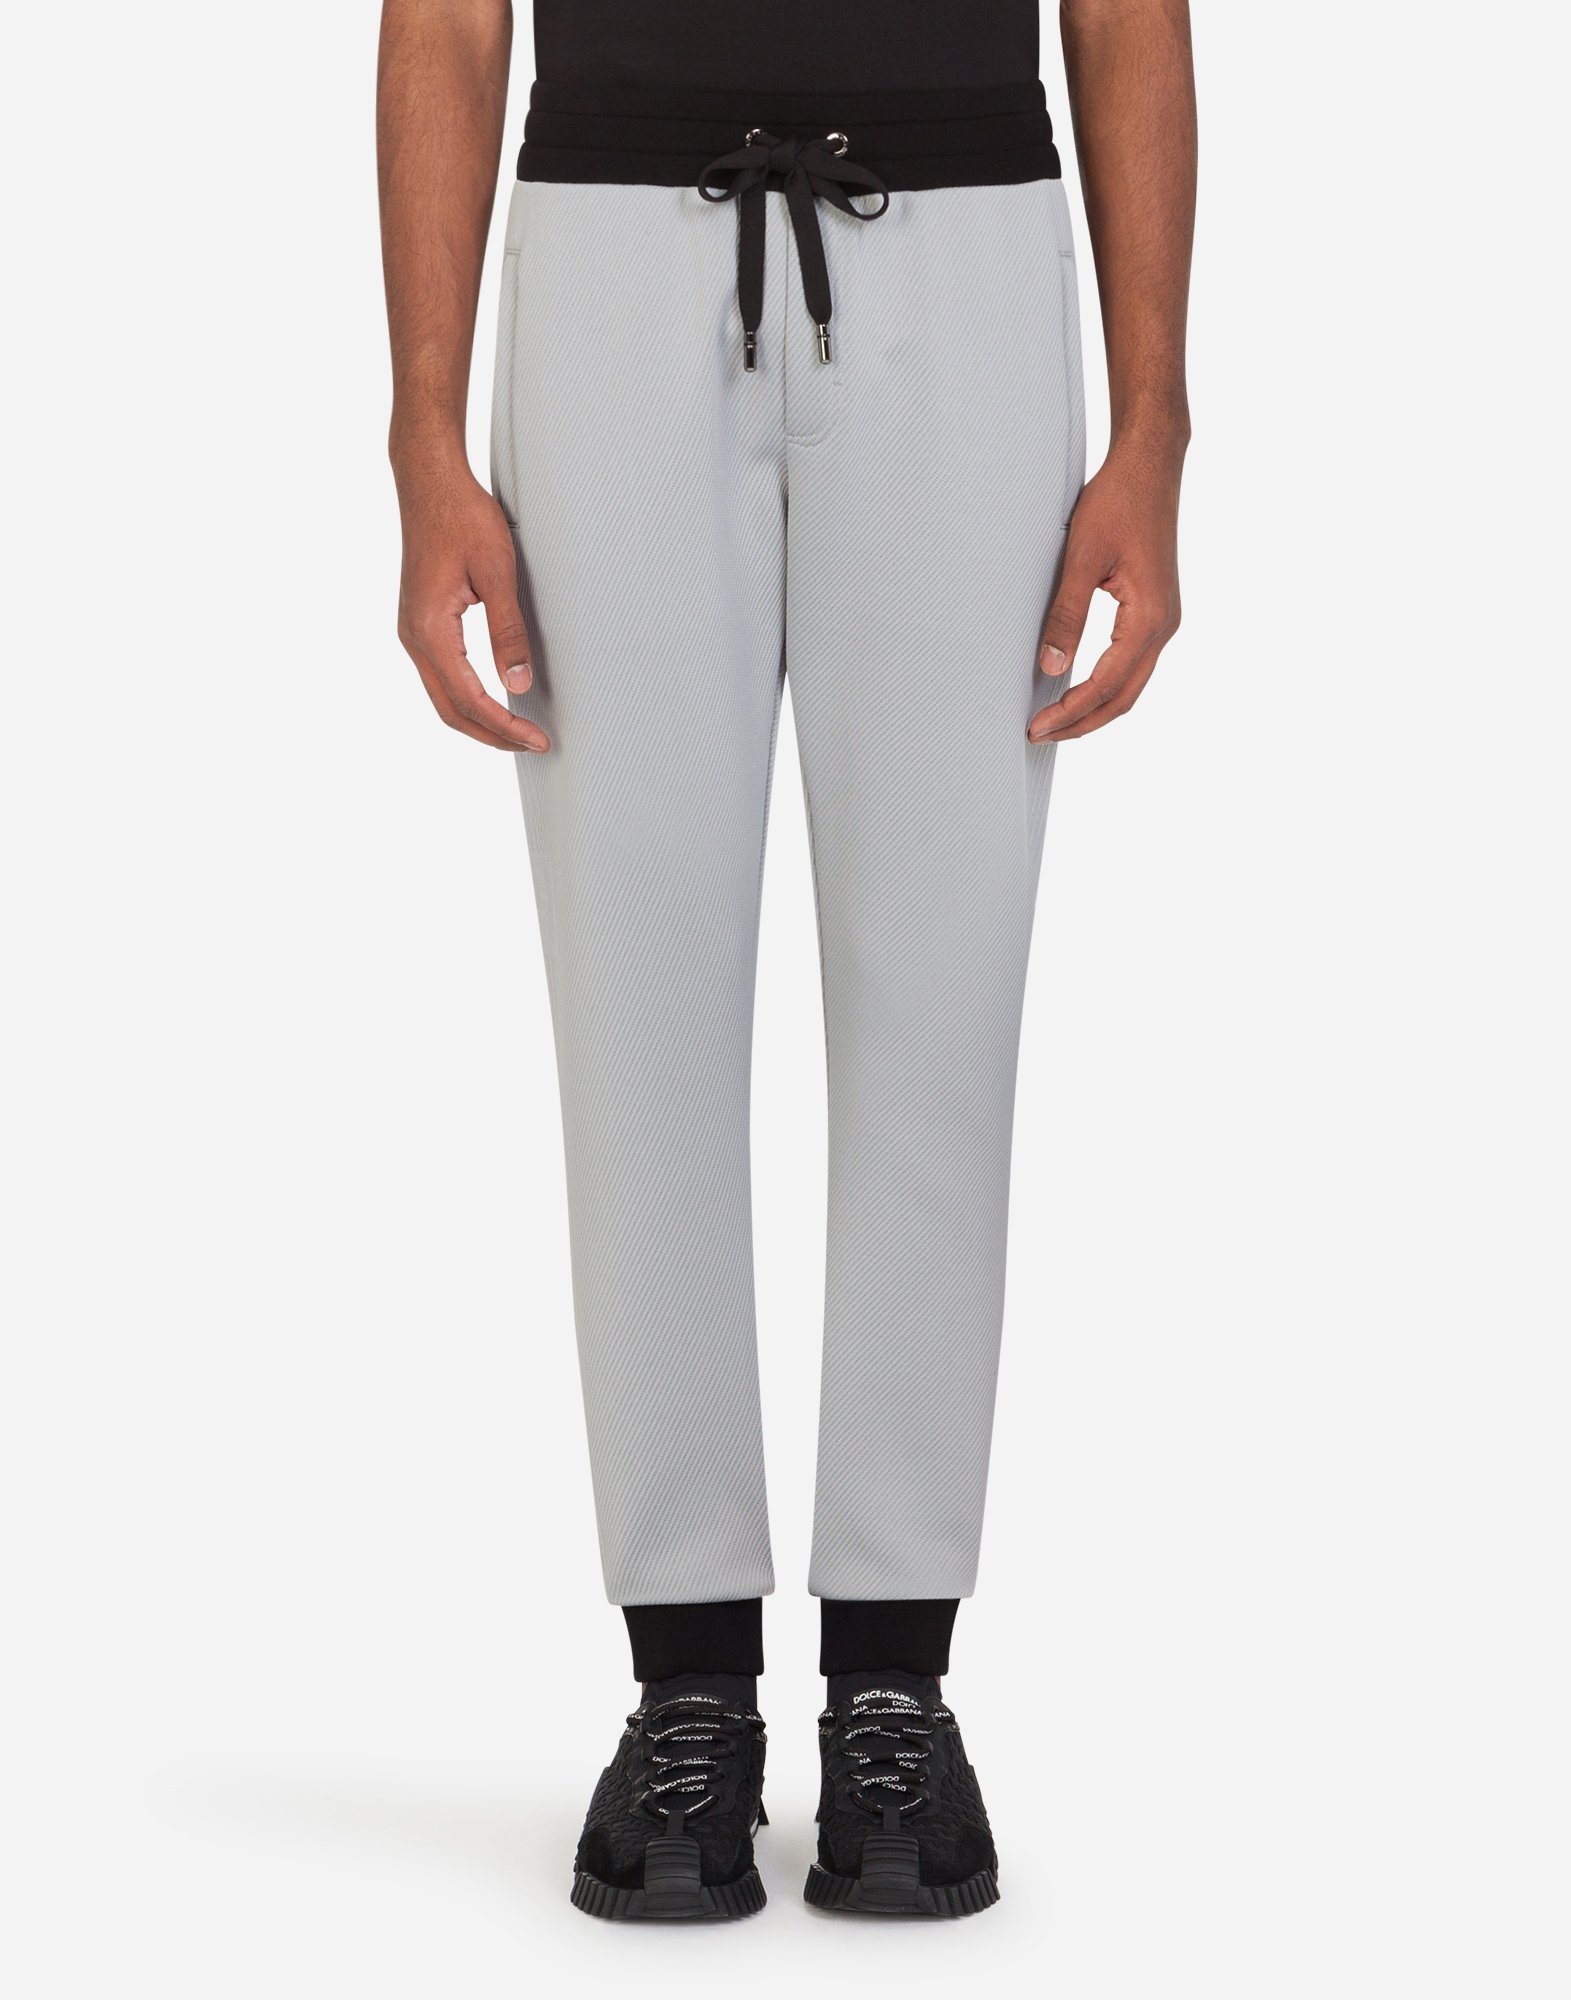 Jacquard jogging pants in Grey